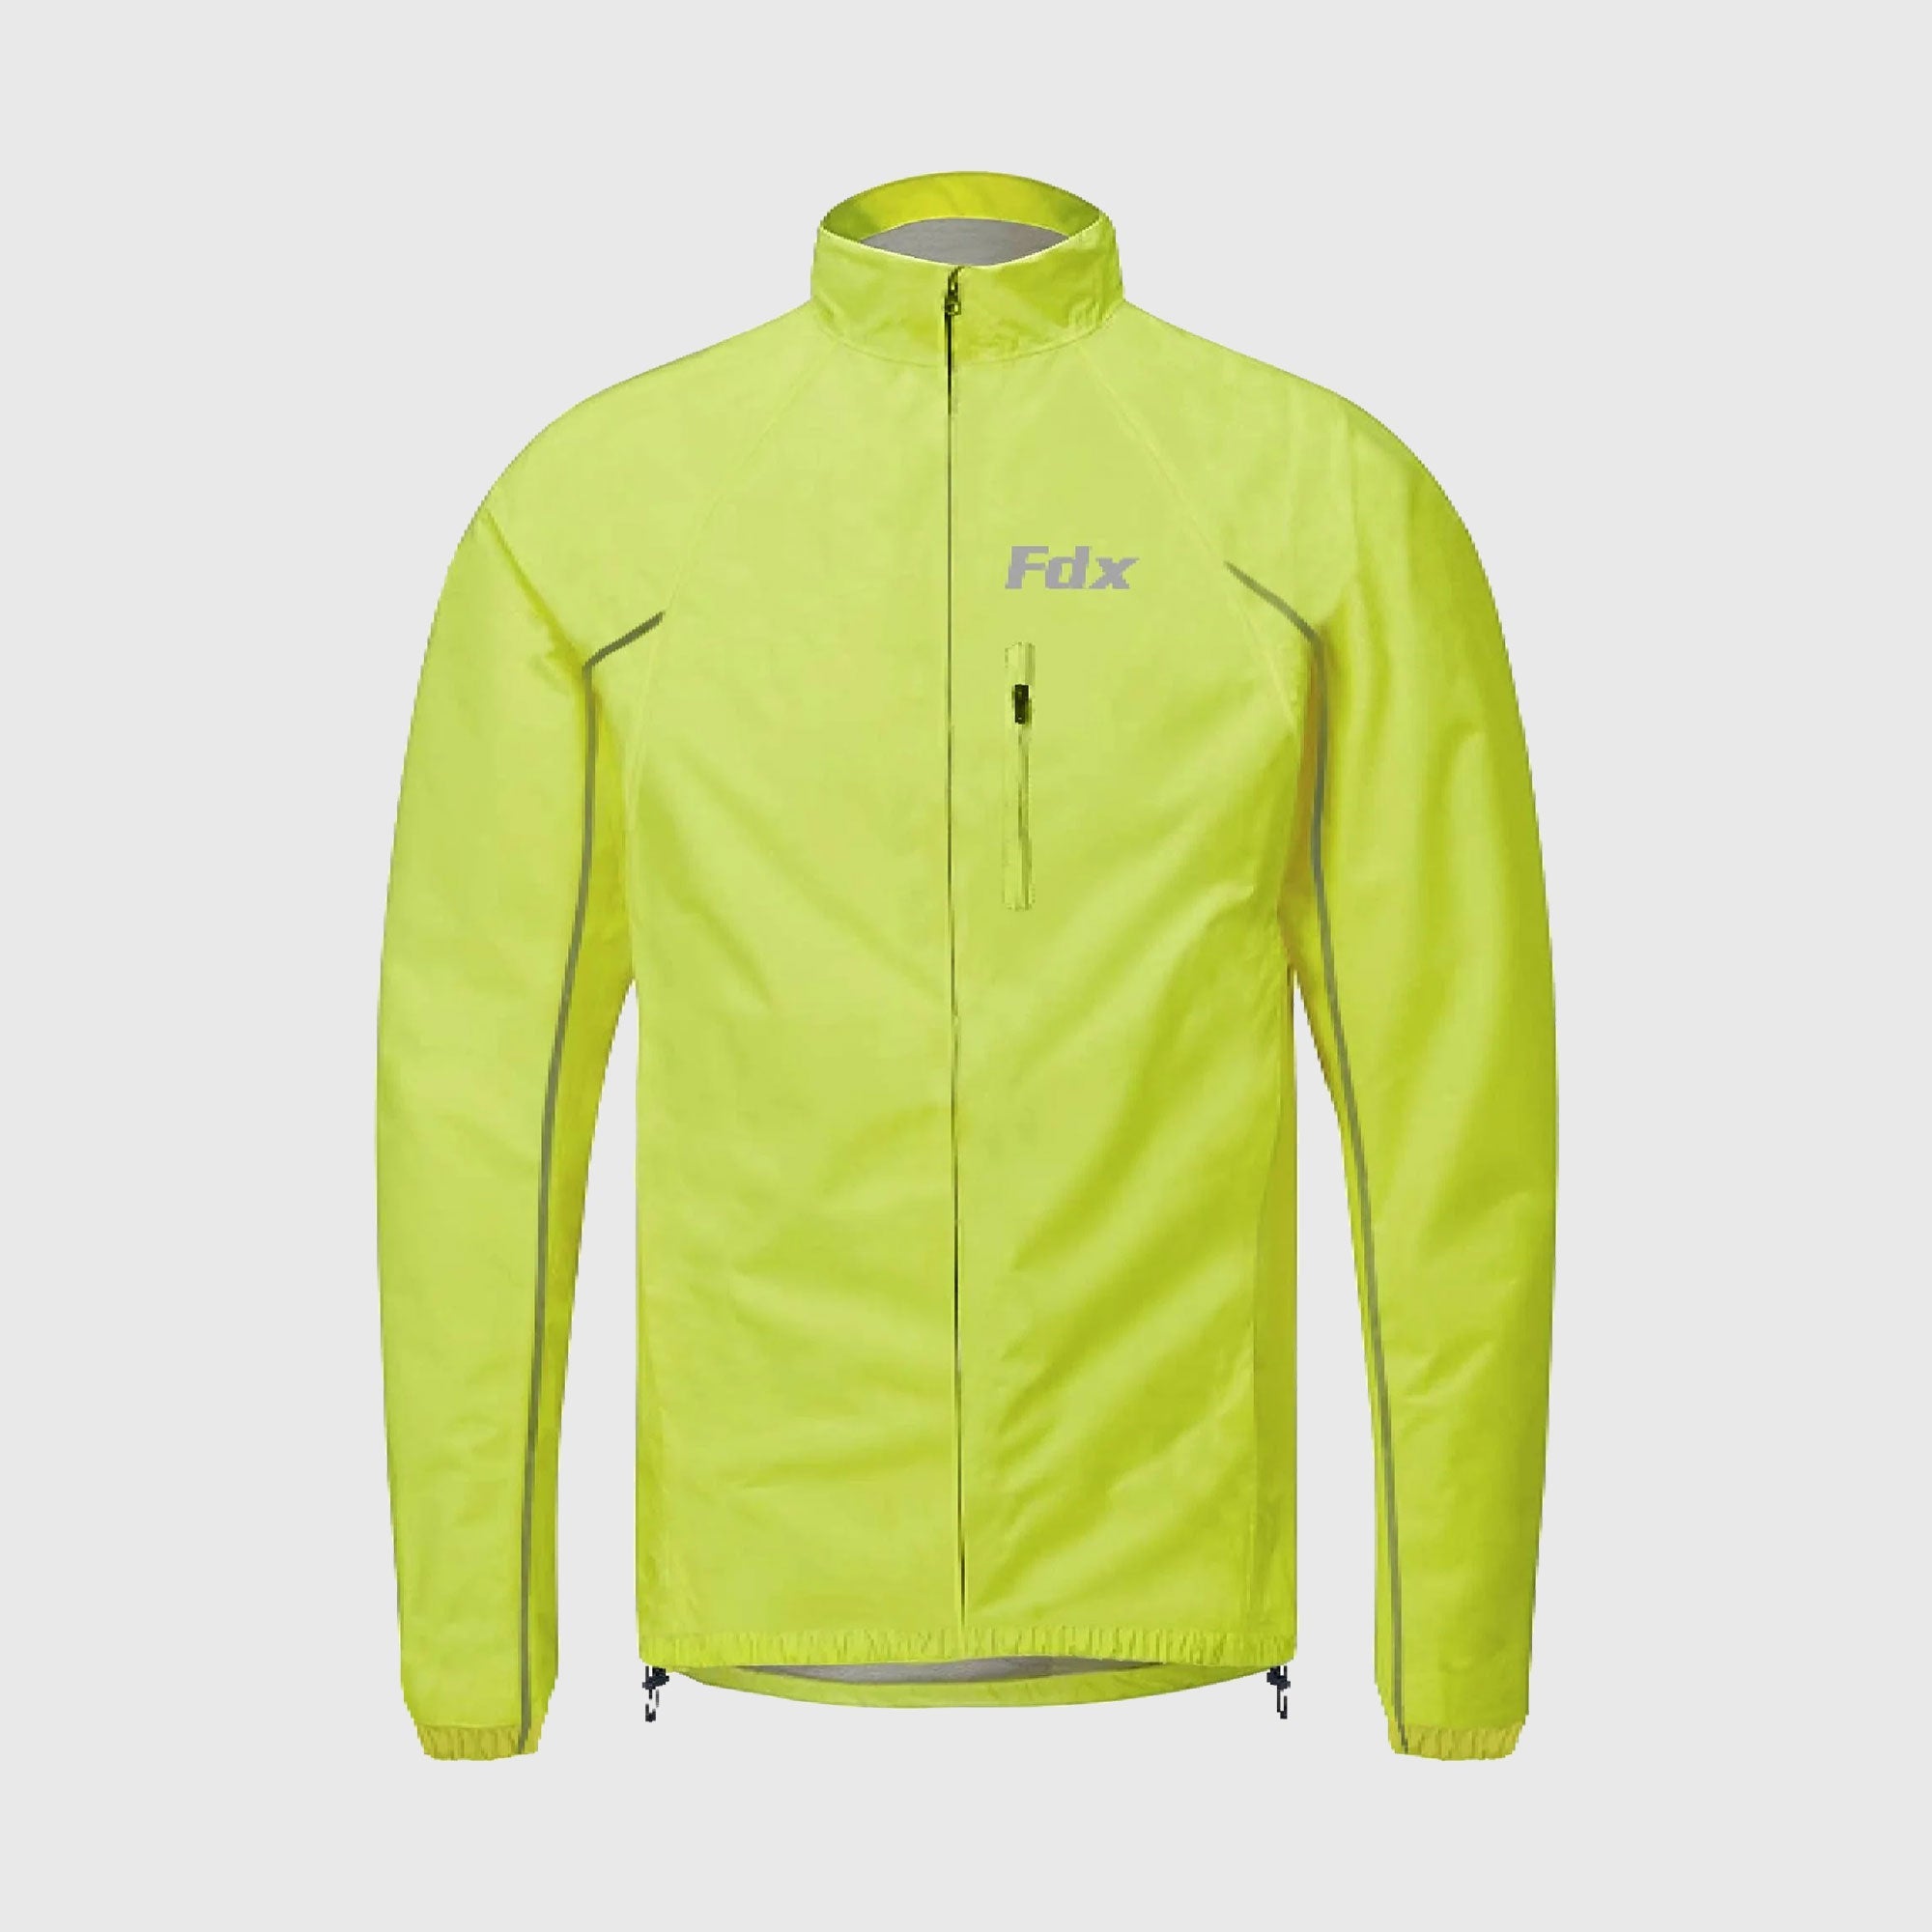 Fdx Defray Yellow Men's Waterproof Cycling Jacket